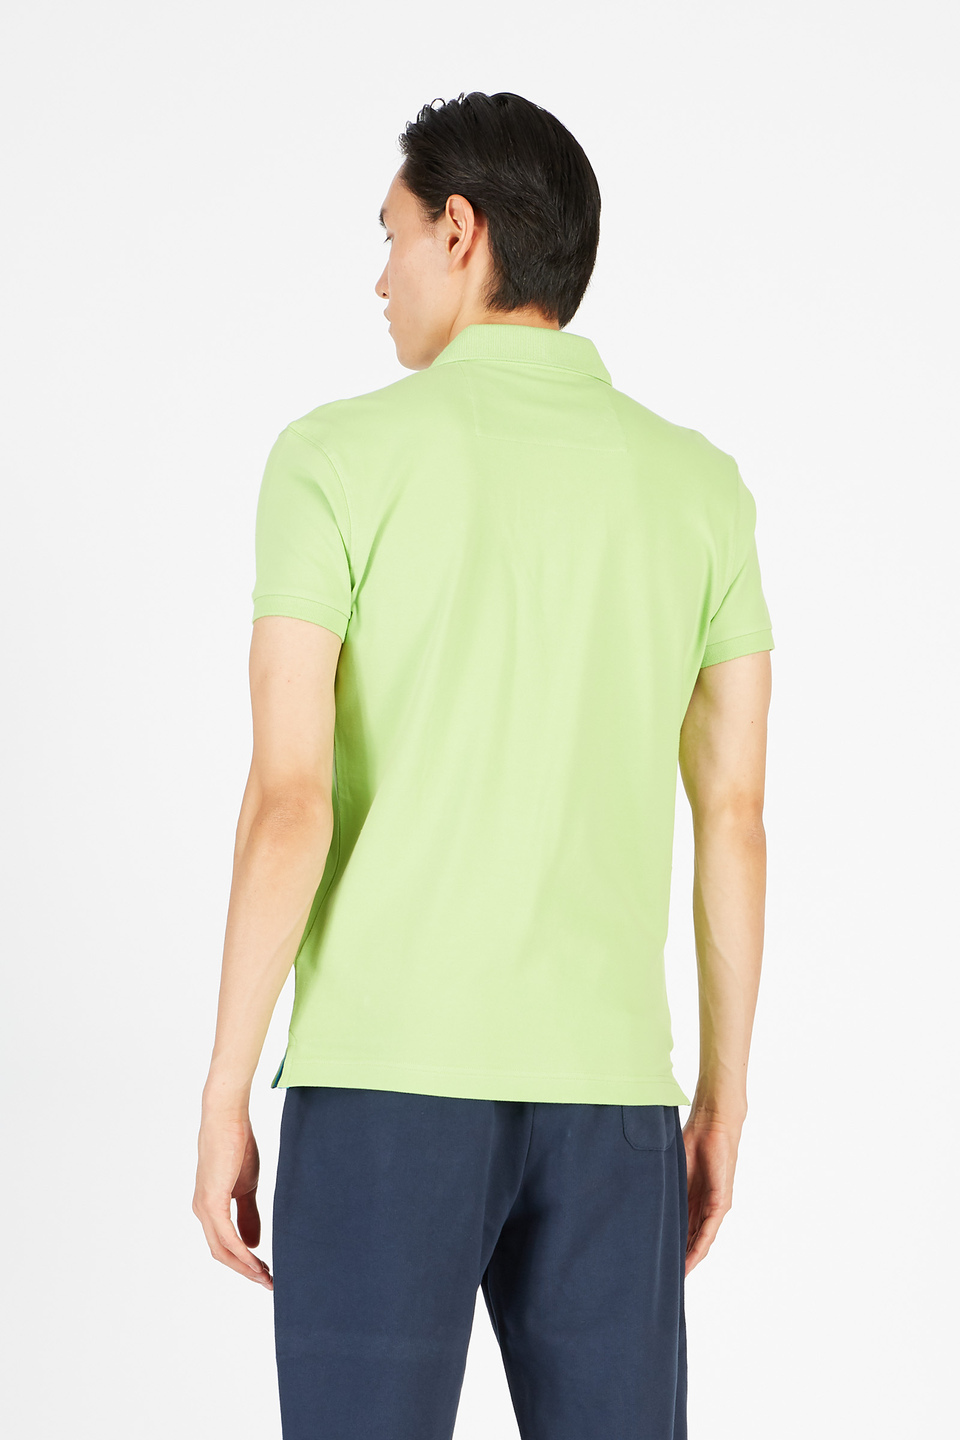 Herren-Poloshirt slim fit | La Martina - Official Online Shop